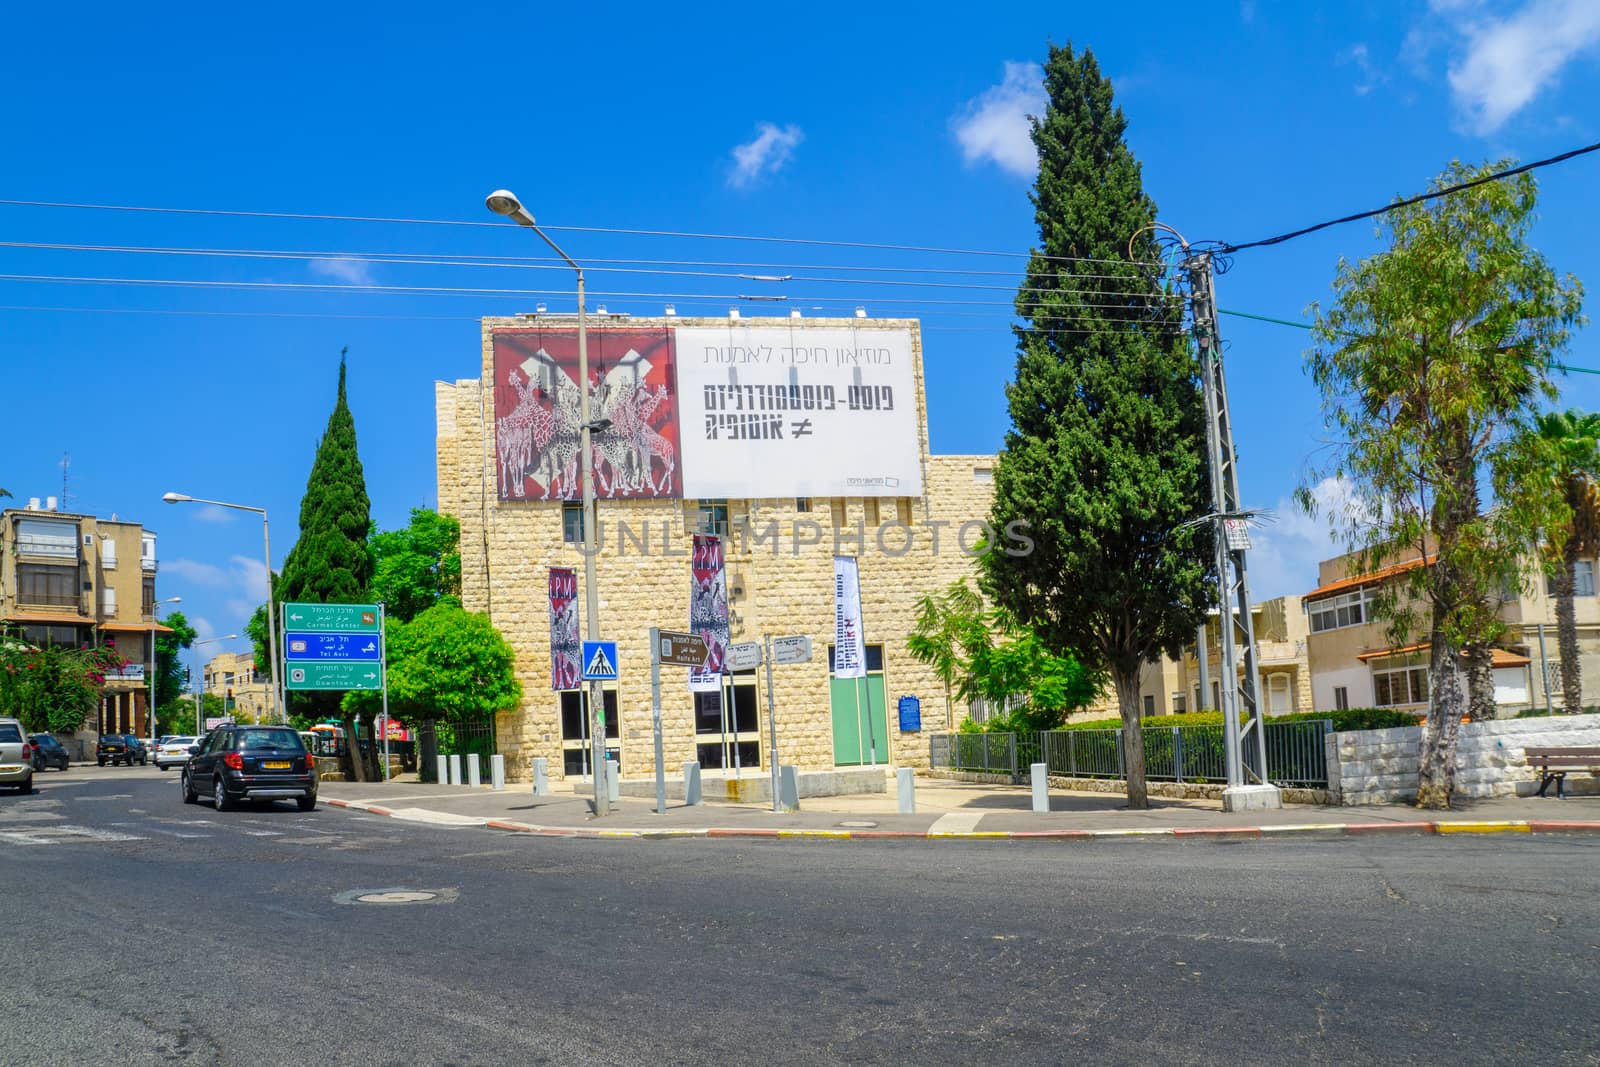  Haifa Museum of Art building by RnDmS